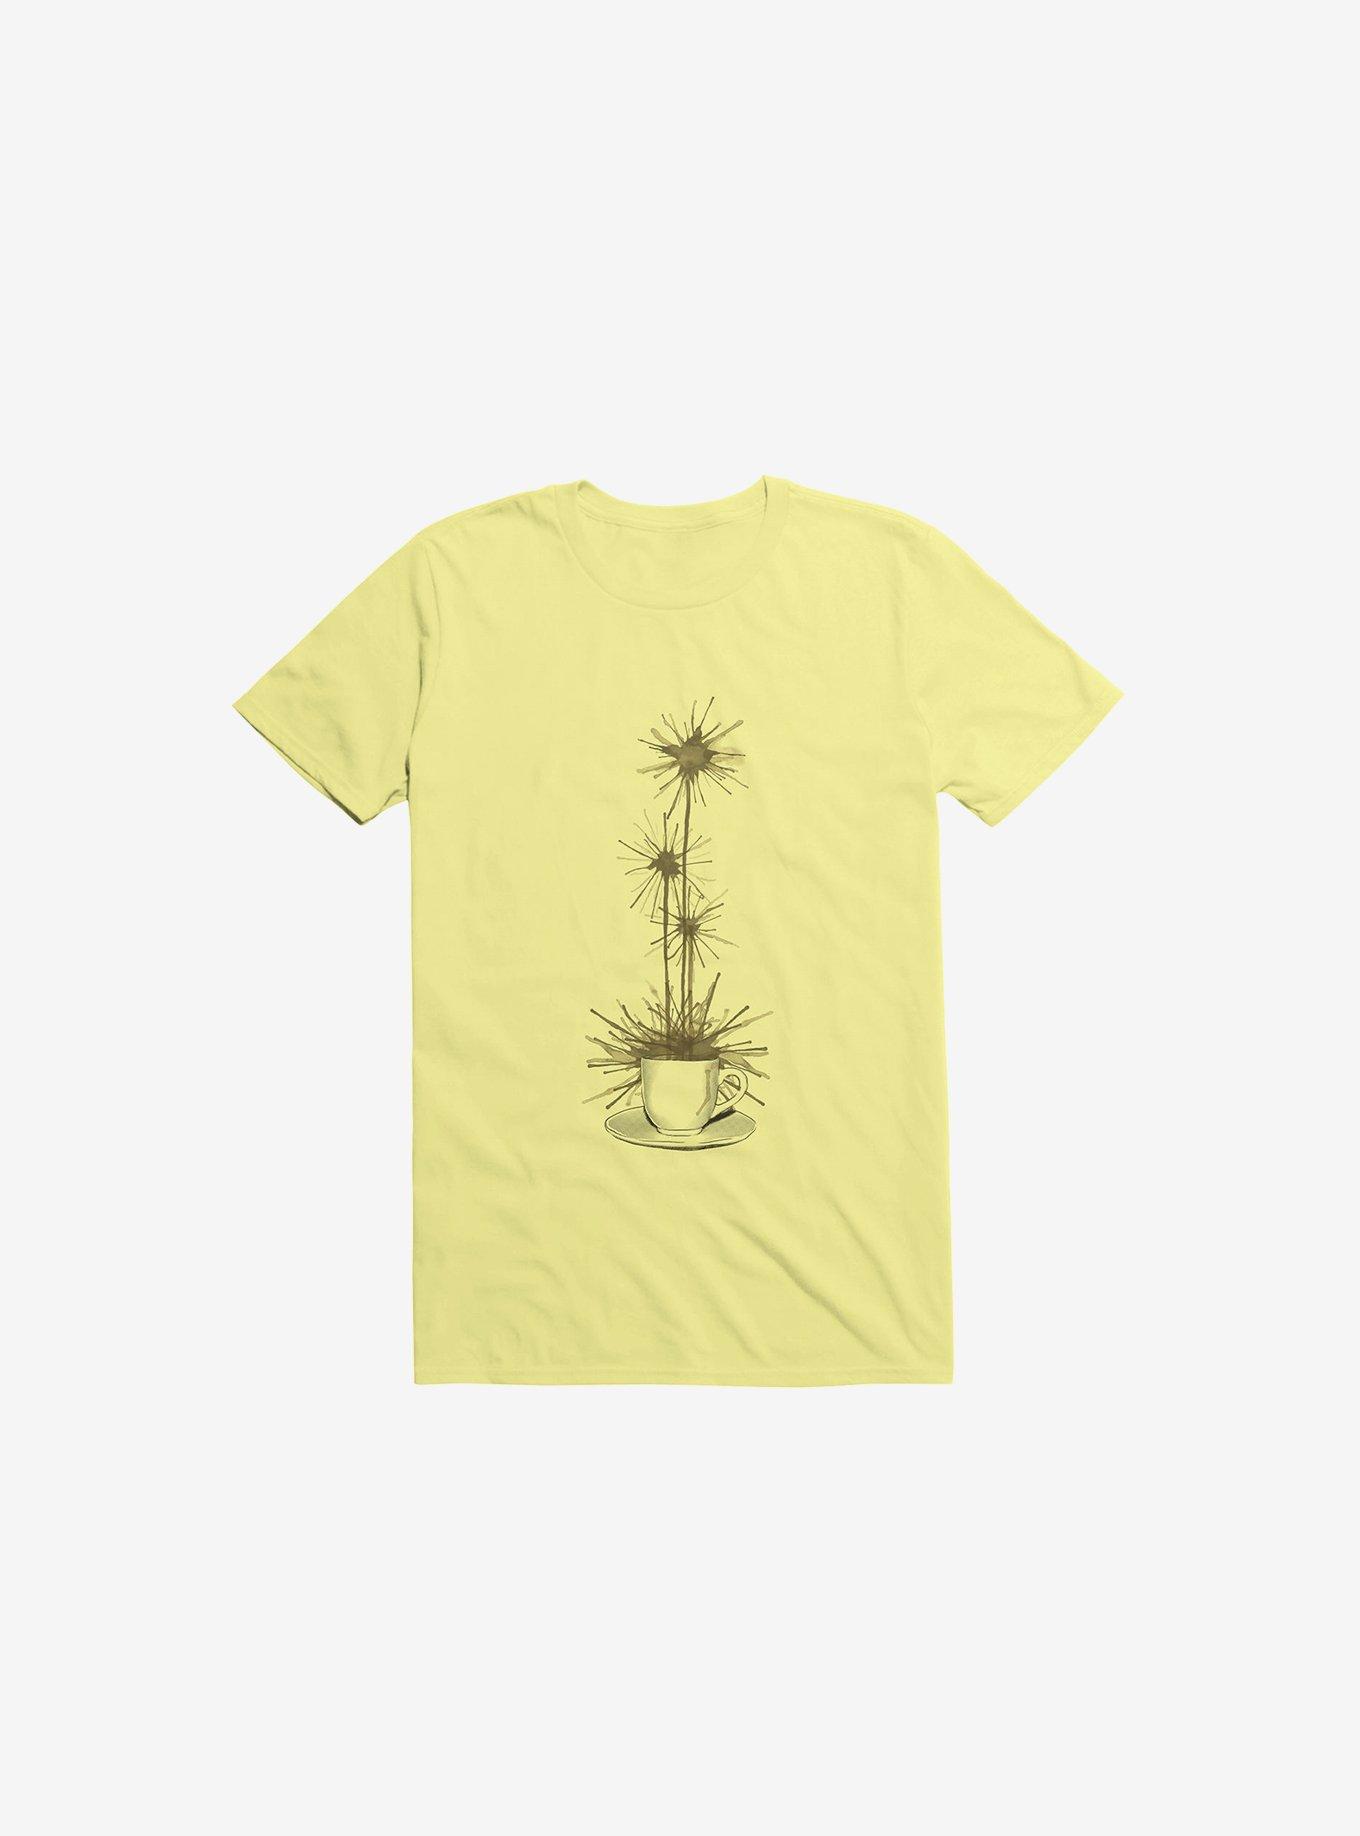 Midnight Flower Corn Silk Yellow T-Shirt, CORN SILK, hi-res